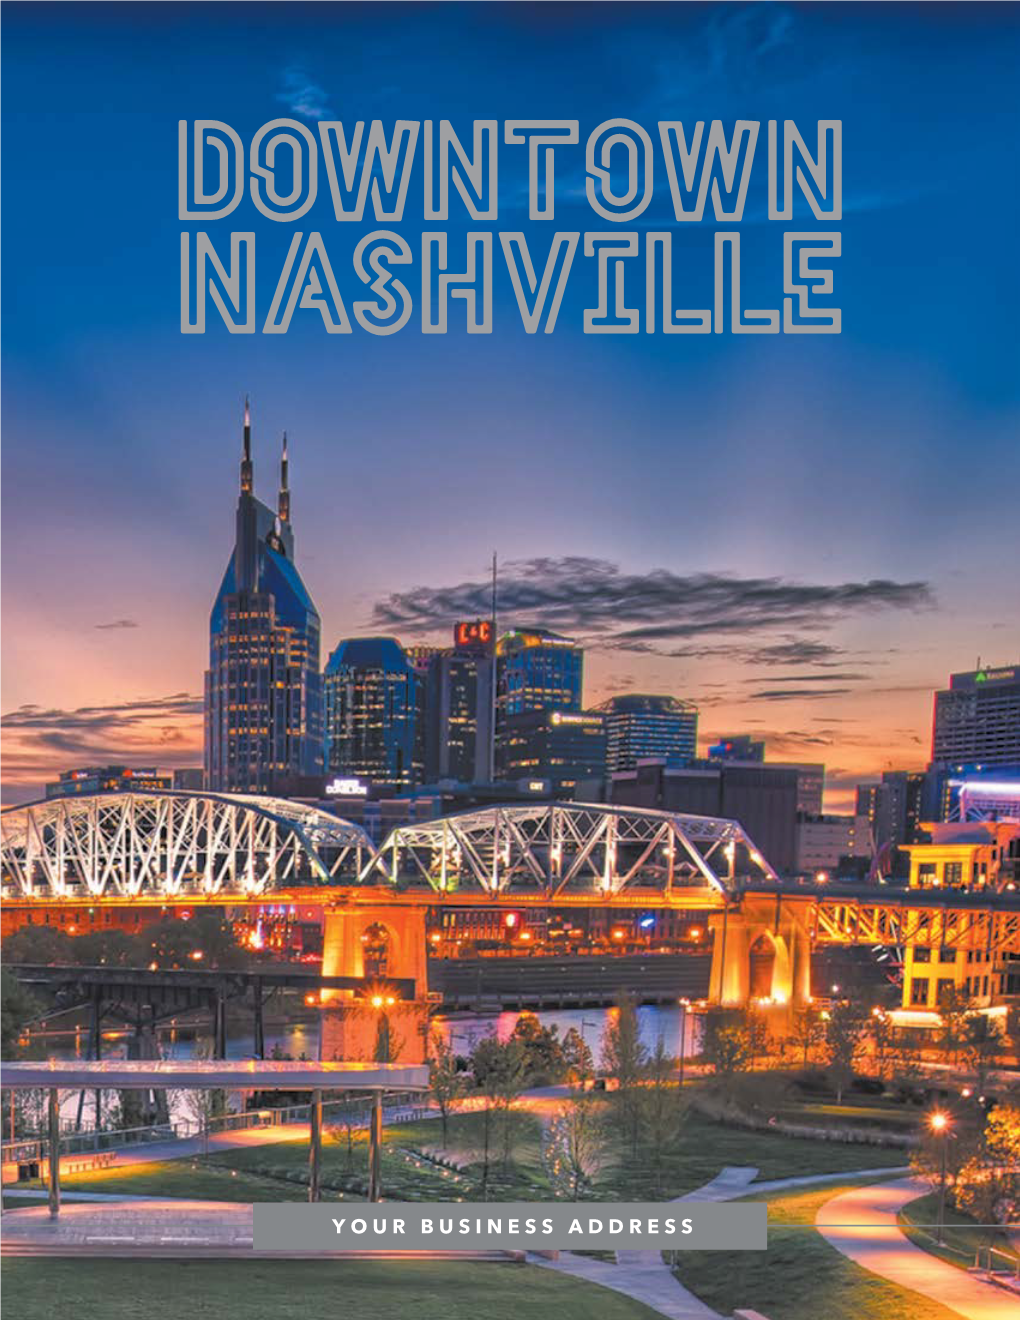 Your Business Address Thriving Business Center the Nashville Advantage